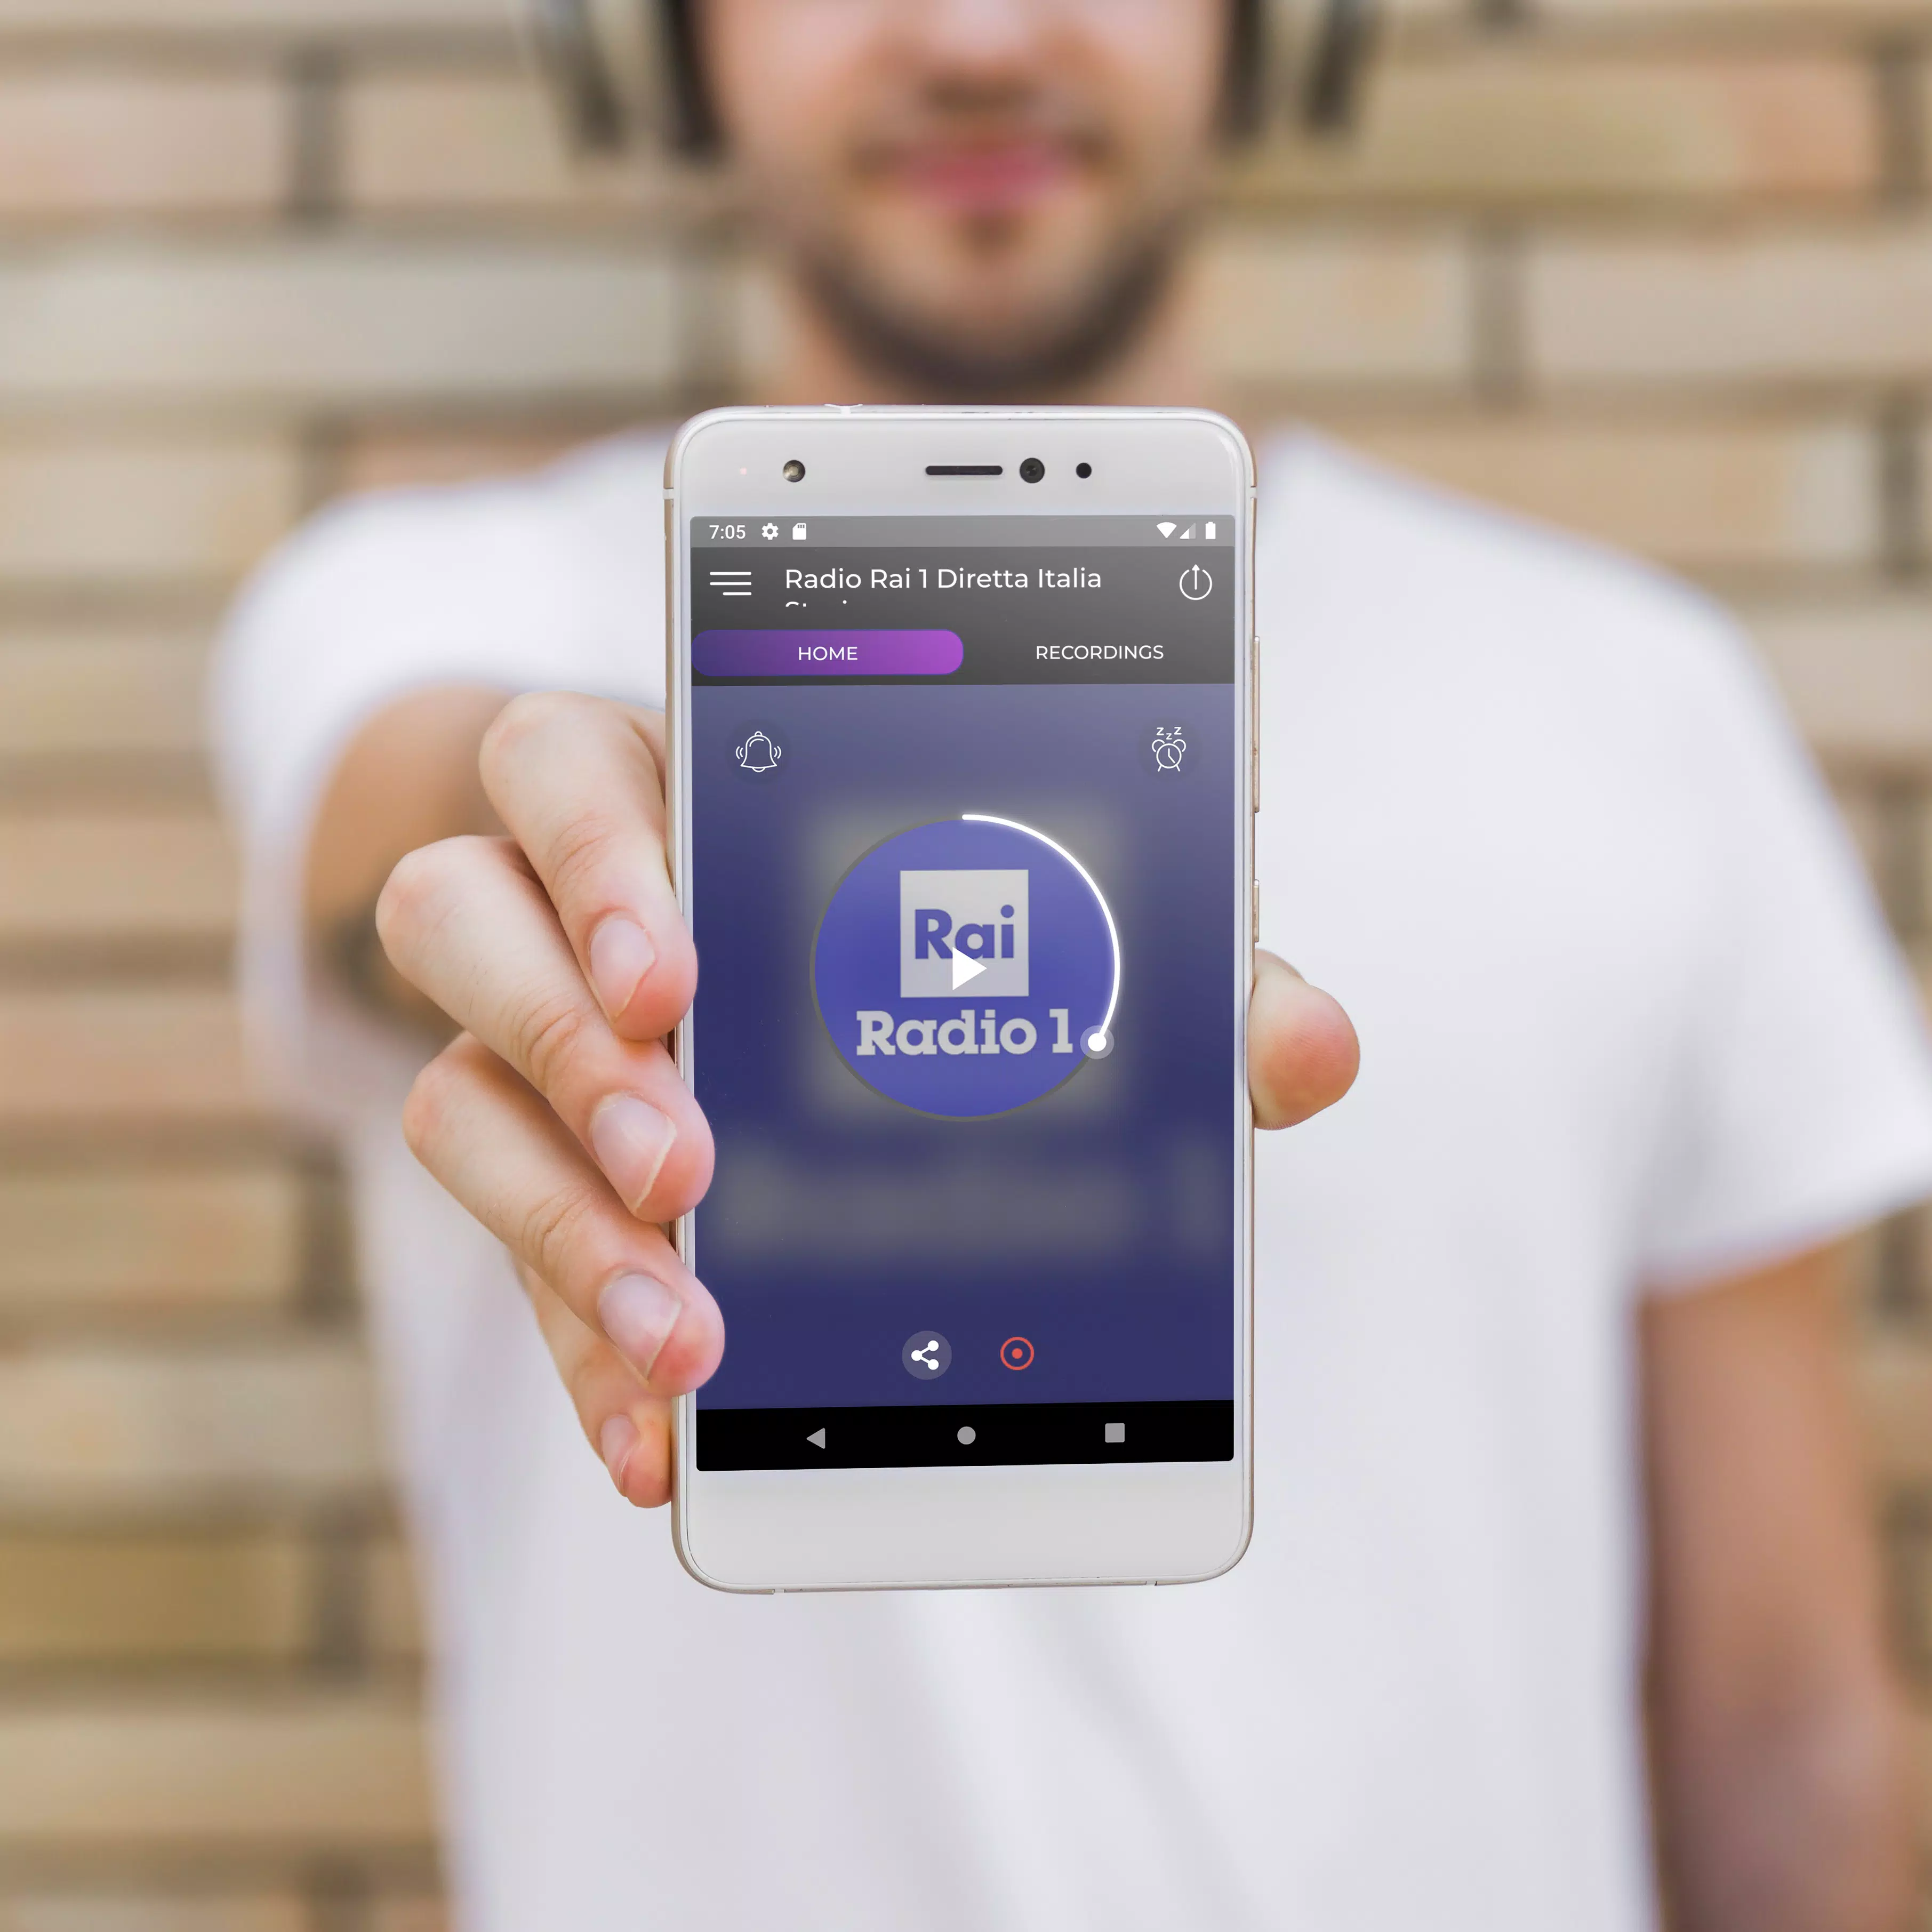 Radio Rai 1 Diretta for Android - APK Download